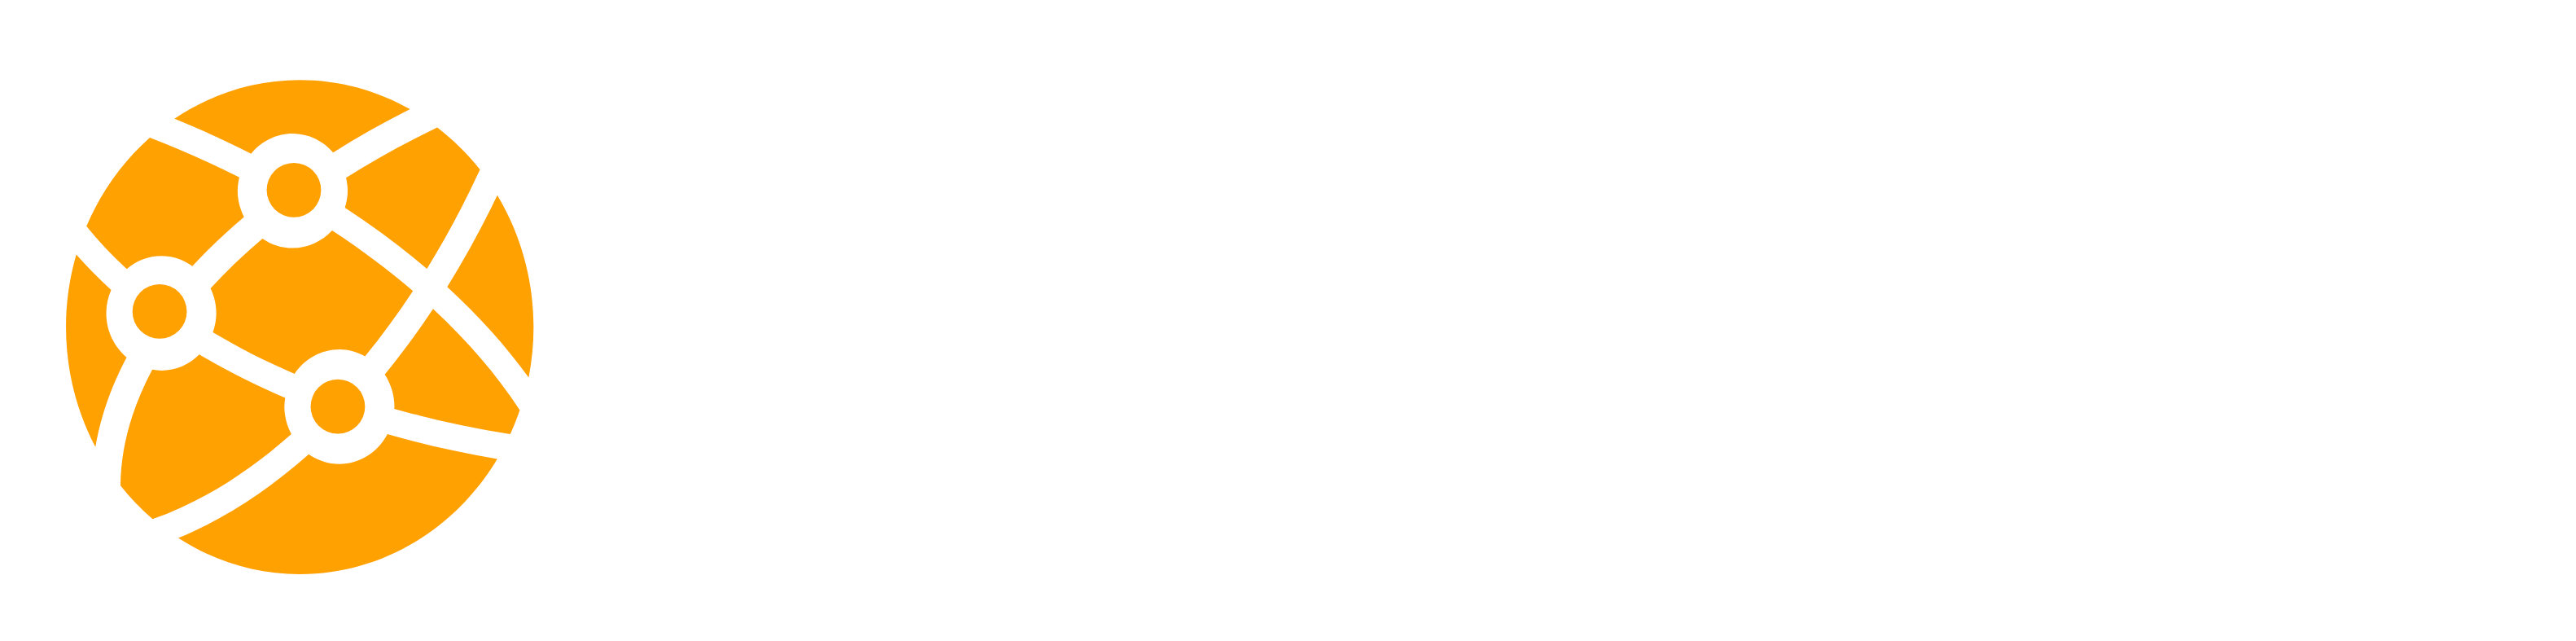 ReflexSOAR logo